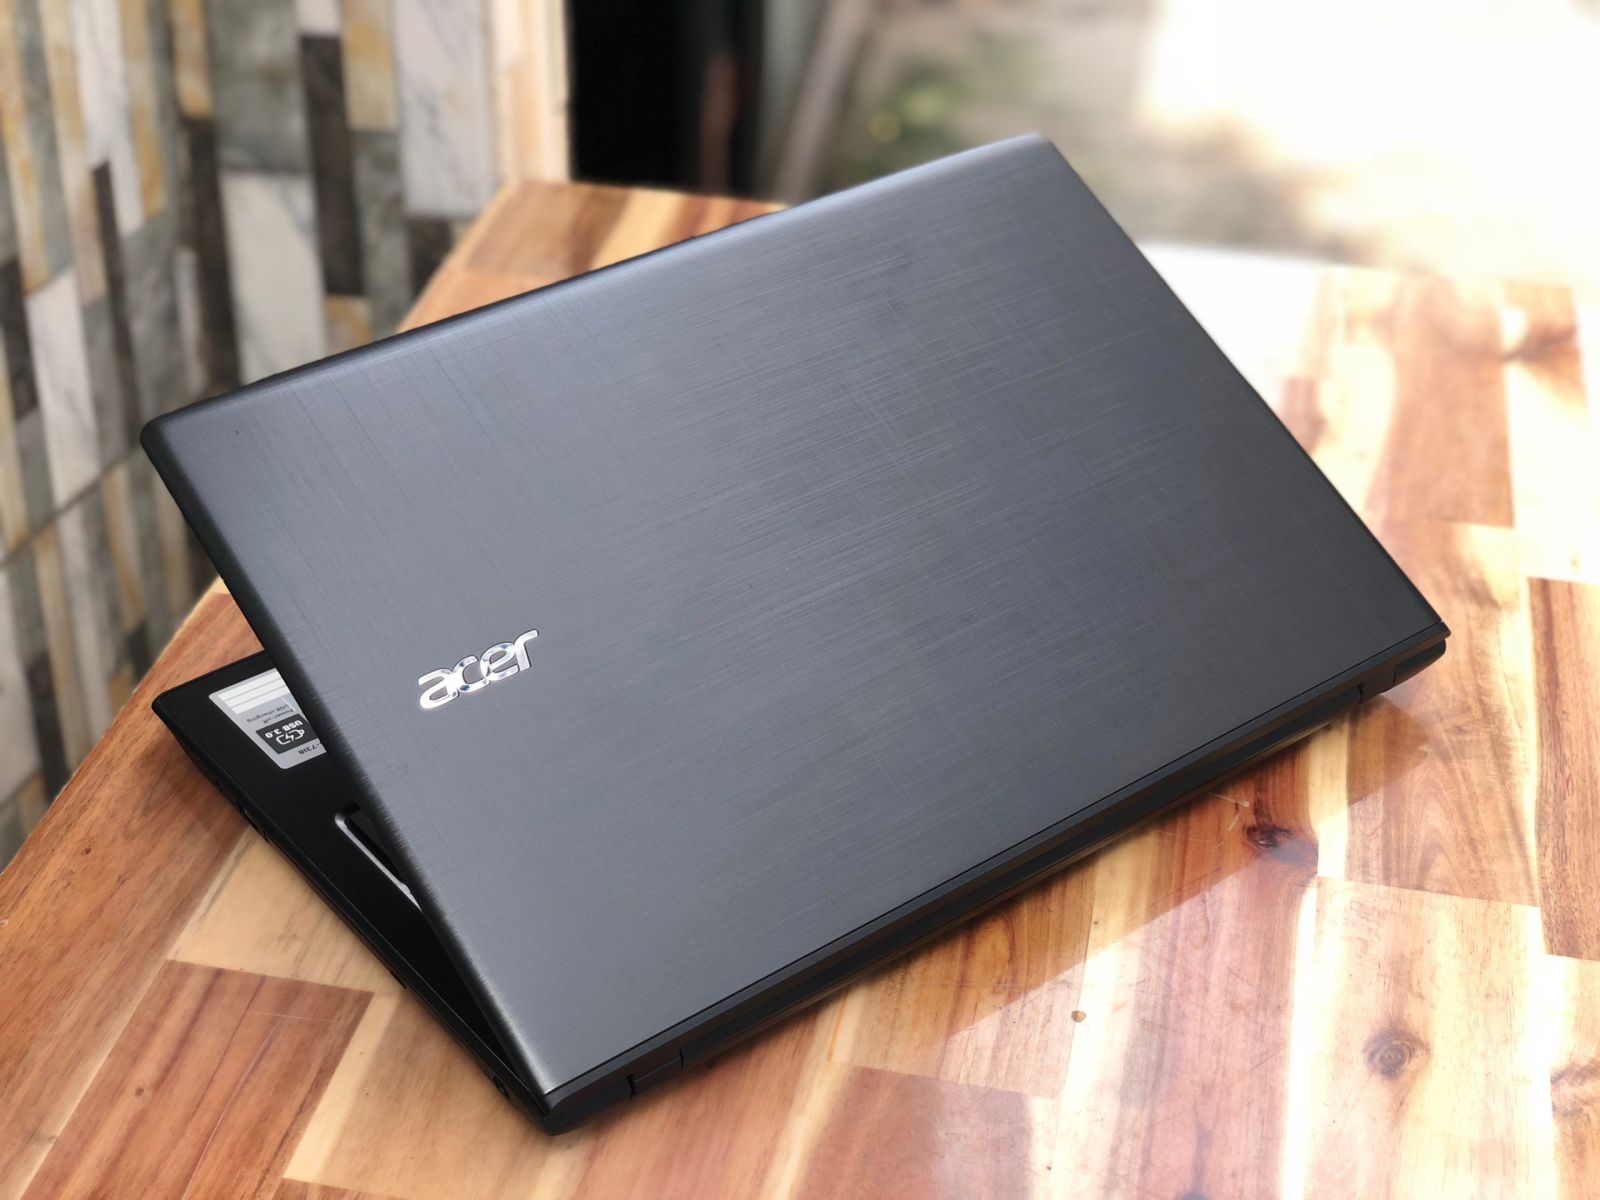 Laptop Acer E5-575G-39QW, i3 7100U 4G 500G Vga GT940MX Full HD Like new zin 100% Giá rẻ2